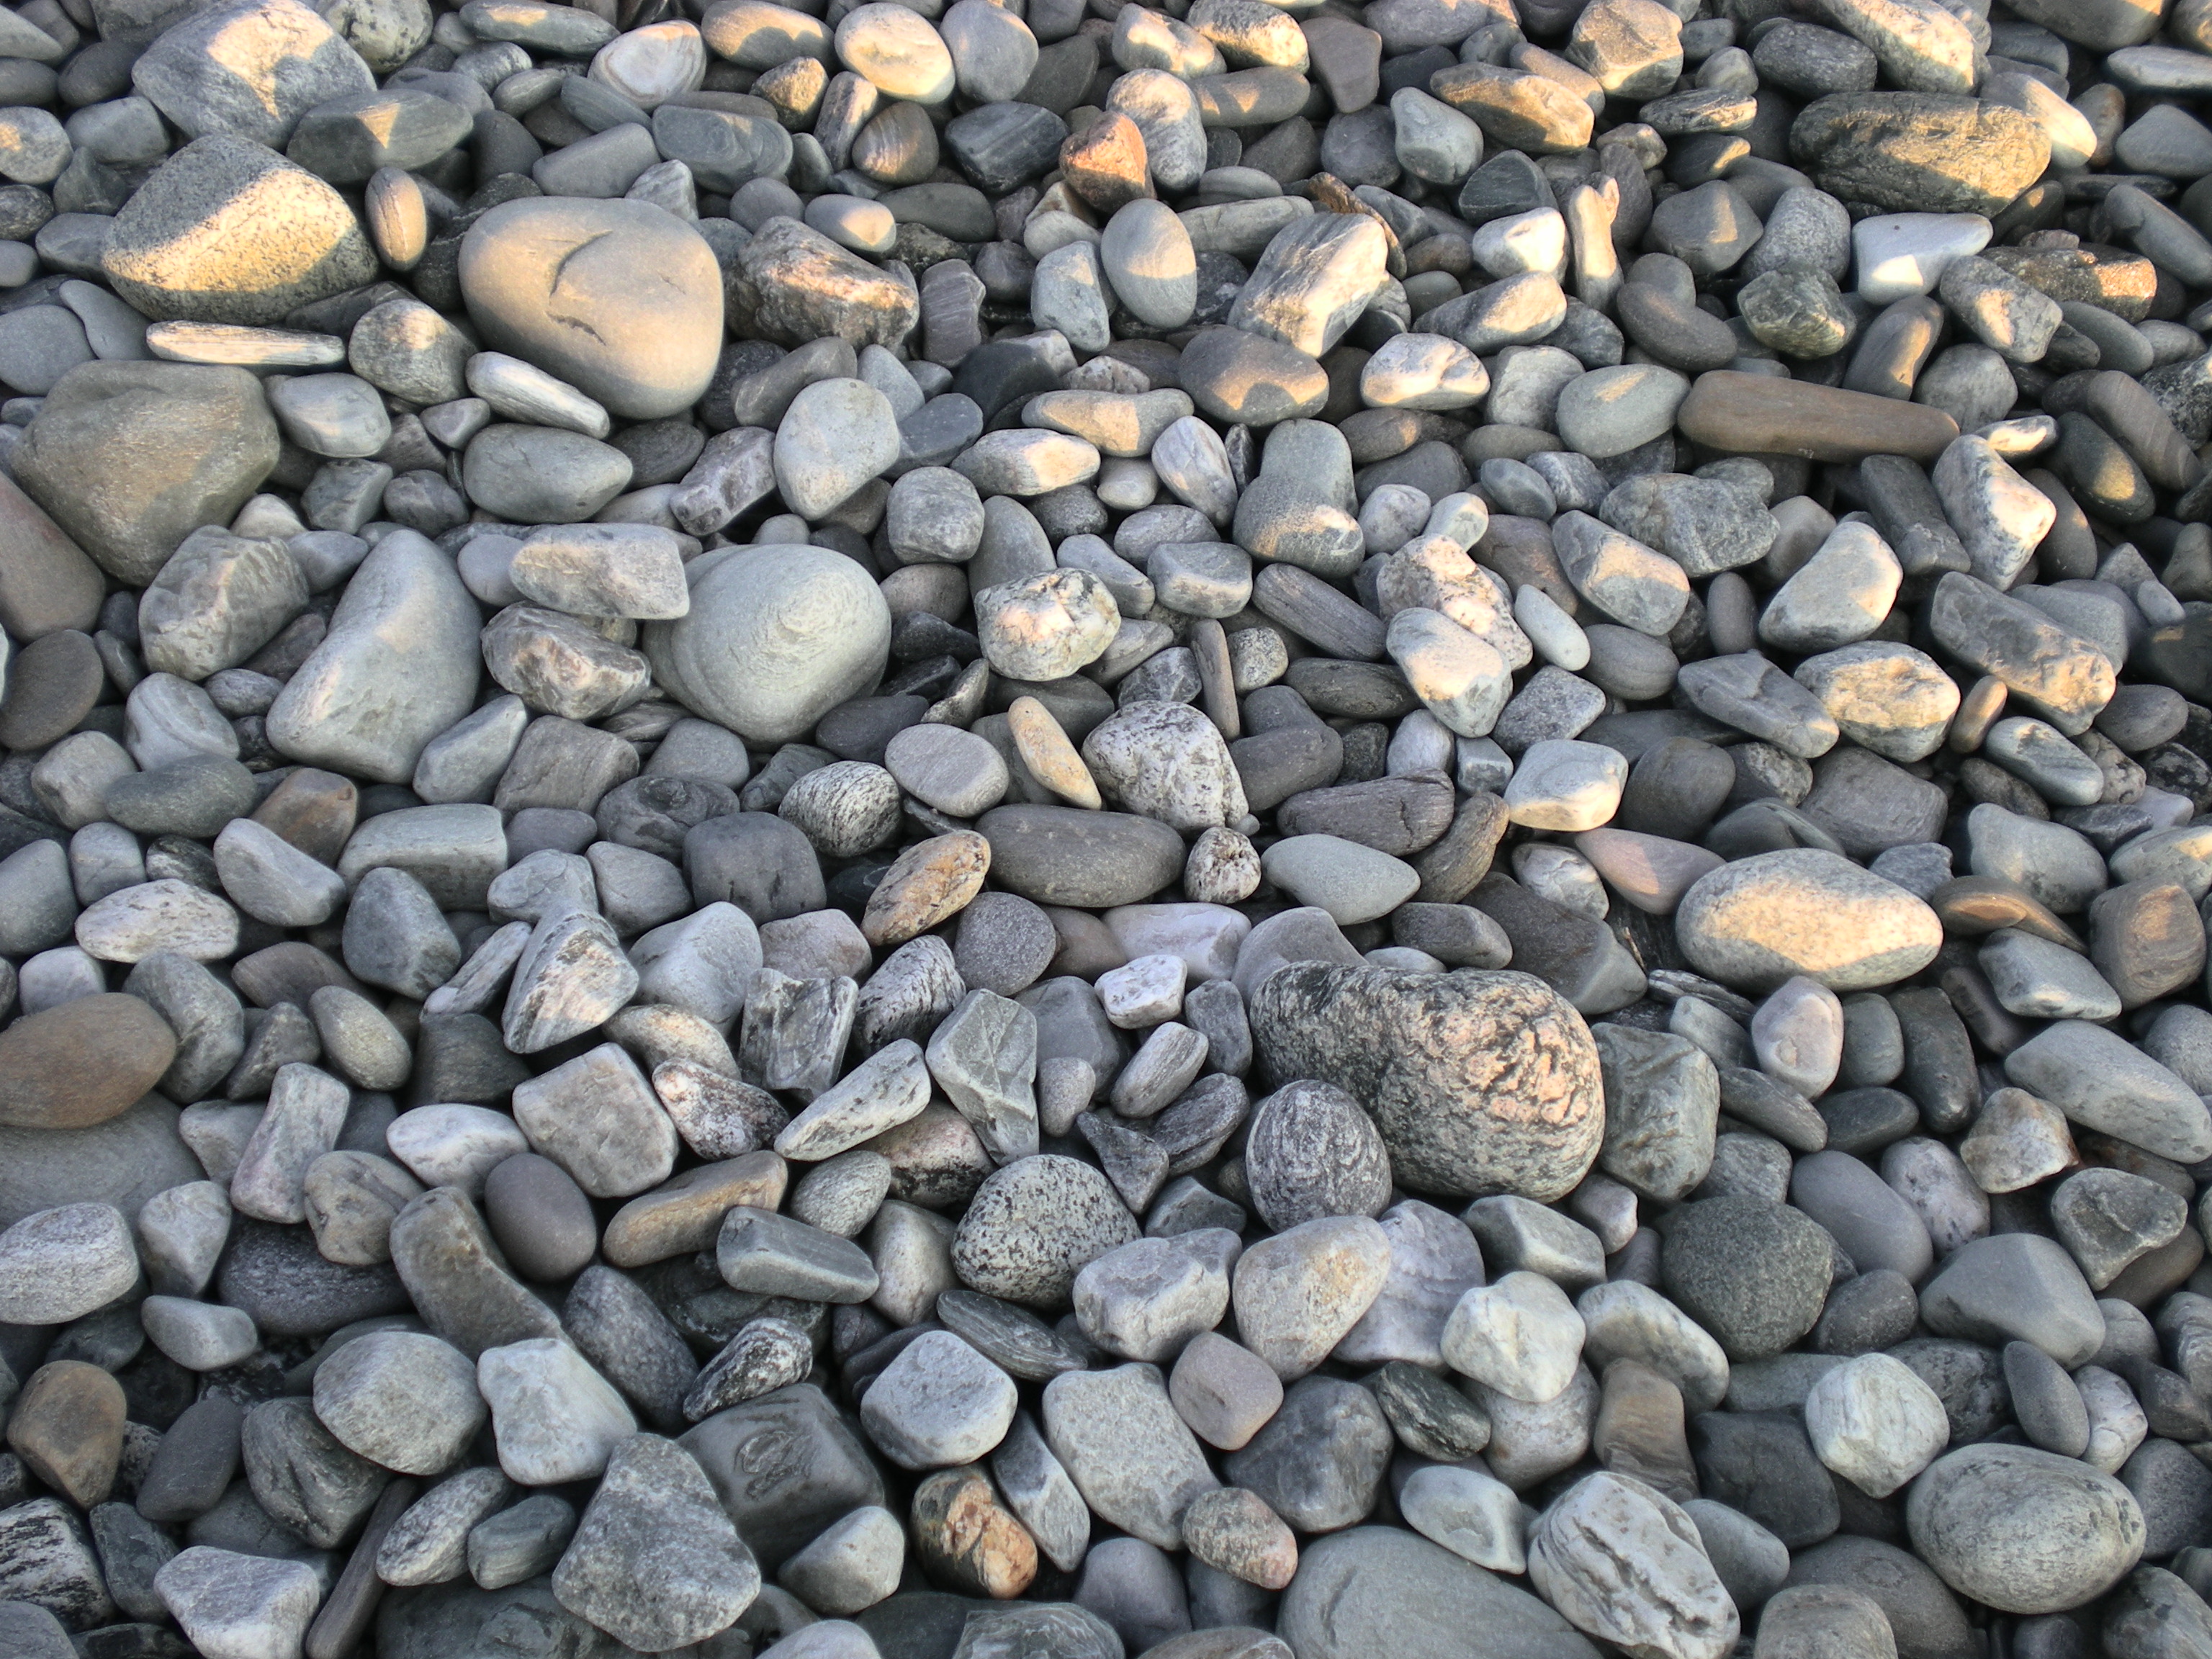 File:Coastal-rocks.jpg - Wikimedia Commons